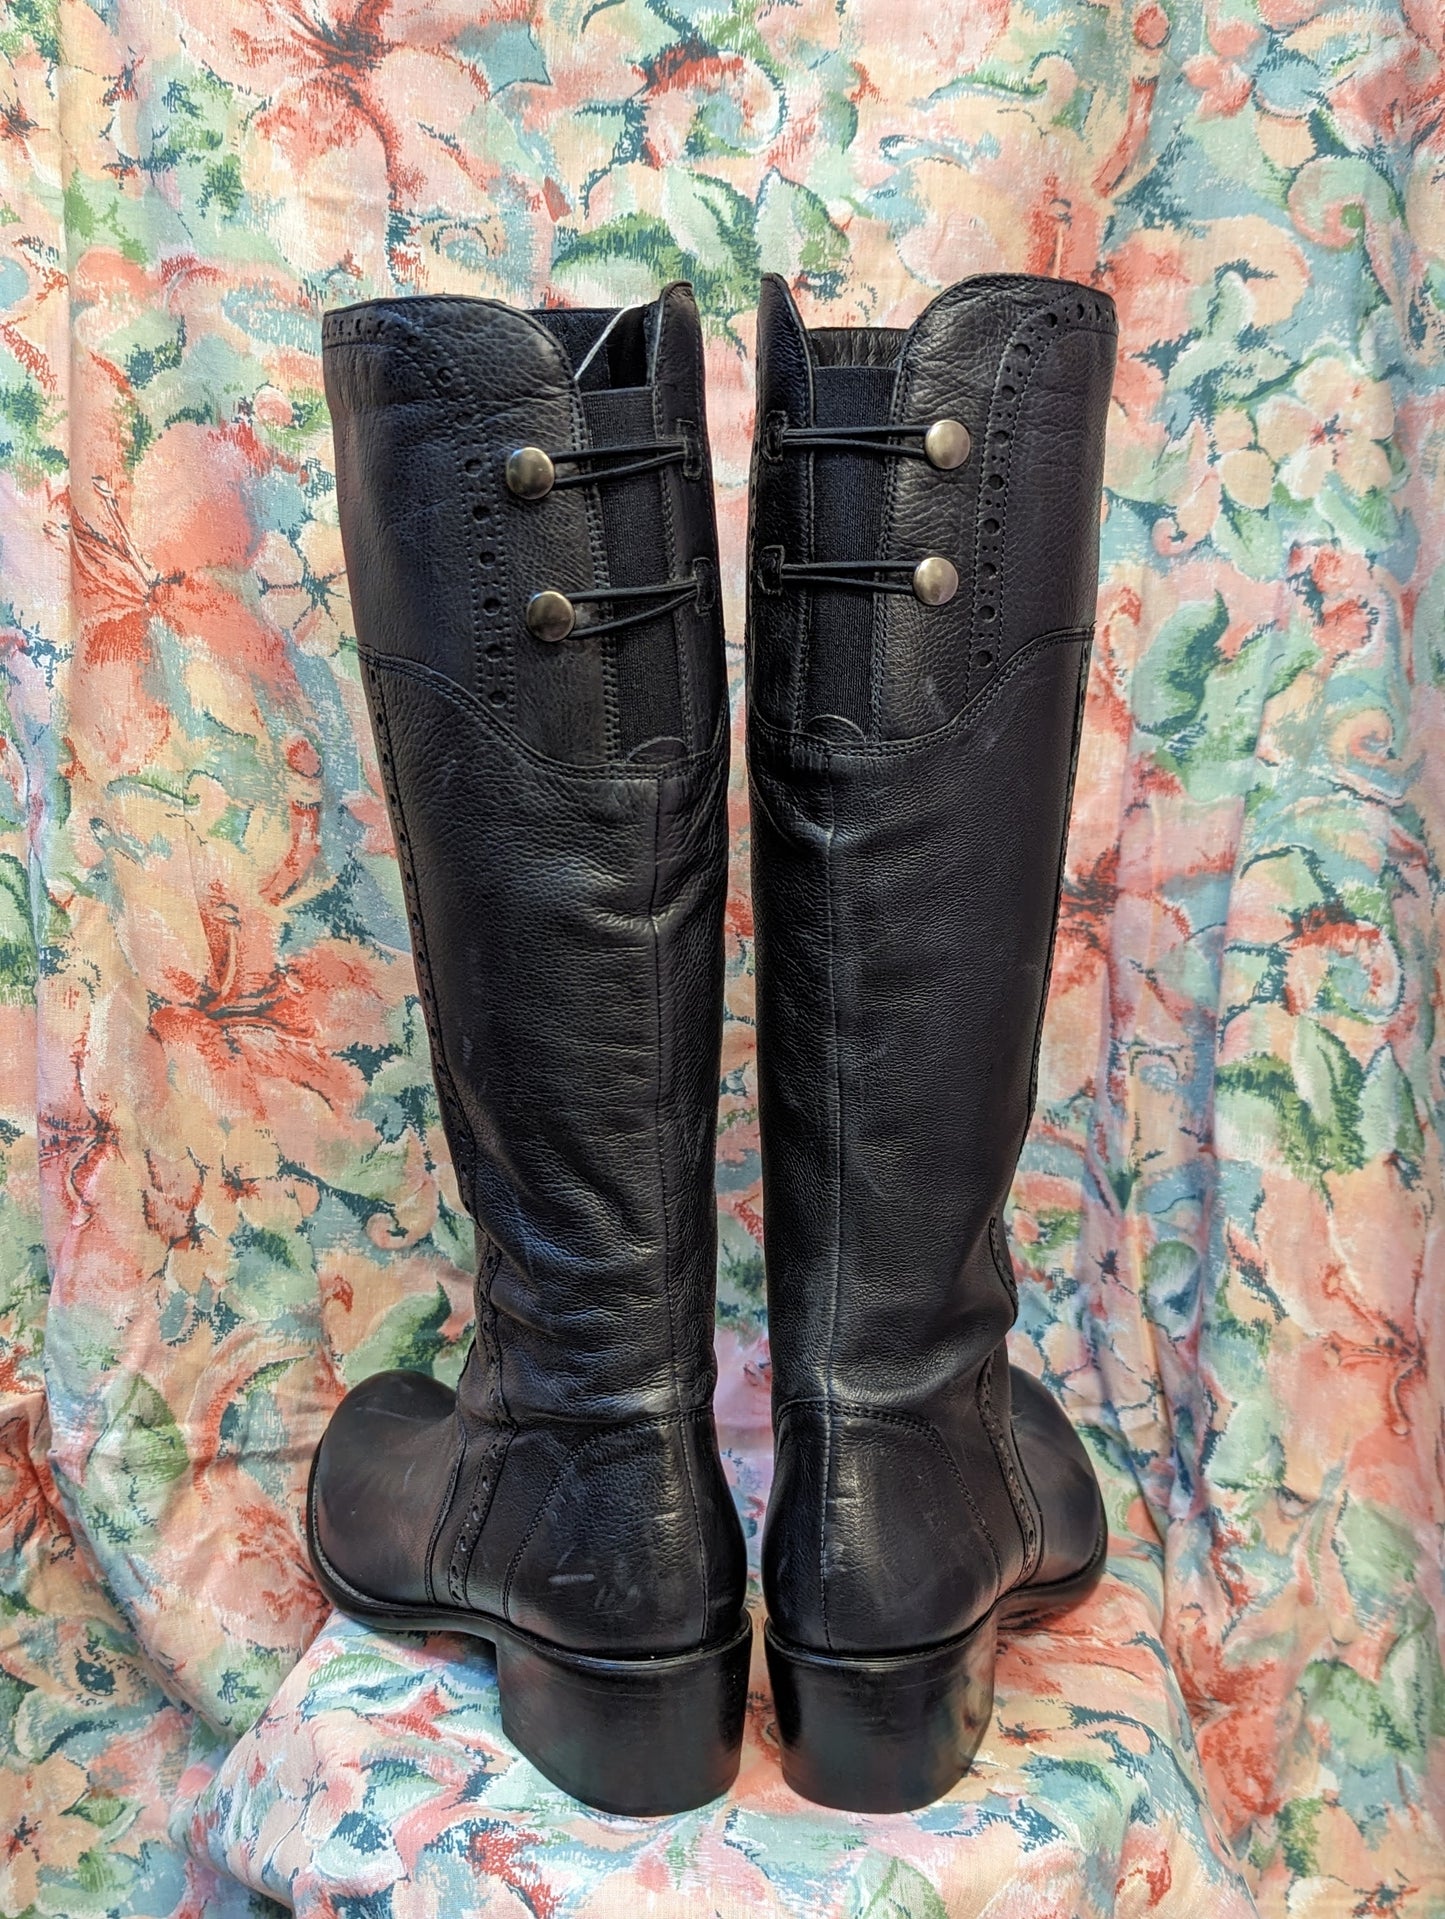 Freeflex Ladies Flat Black Leather Tall Knee High Boots Size UK6 EU39 Good Condition